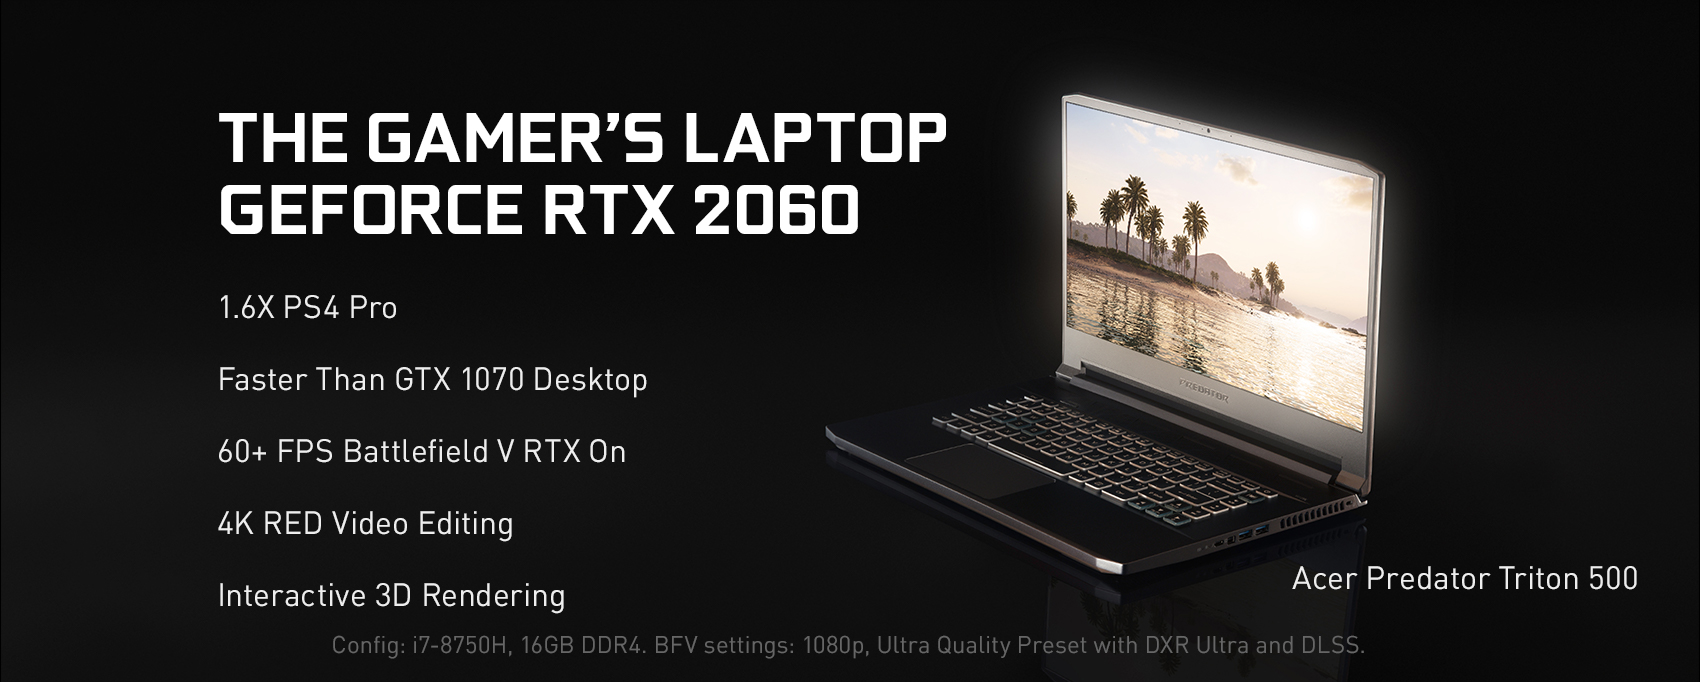 NVIDIA Launches GeForce RTX SUPER Series GPUs geforce-rtx-2060-laptops-850@2x-final-version.jpg